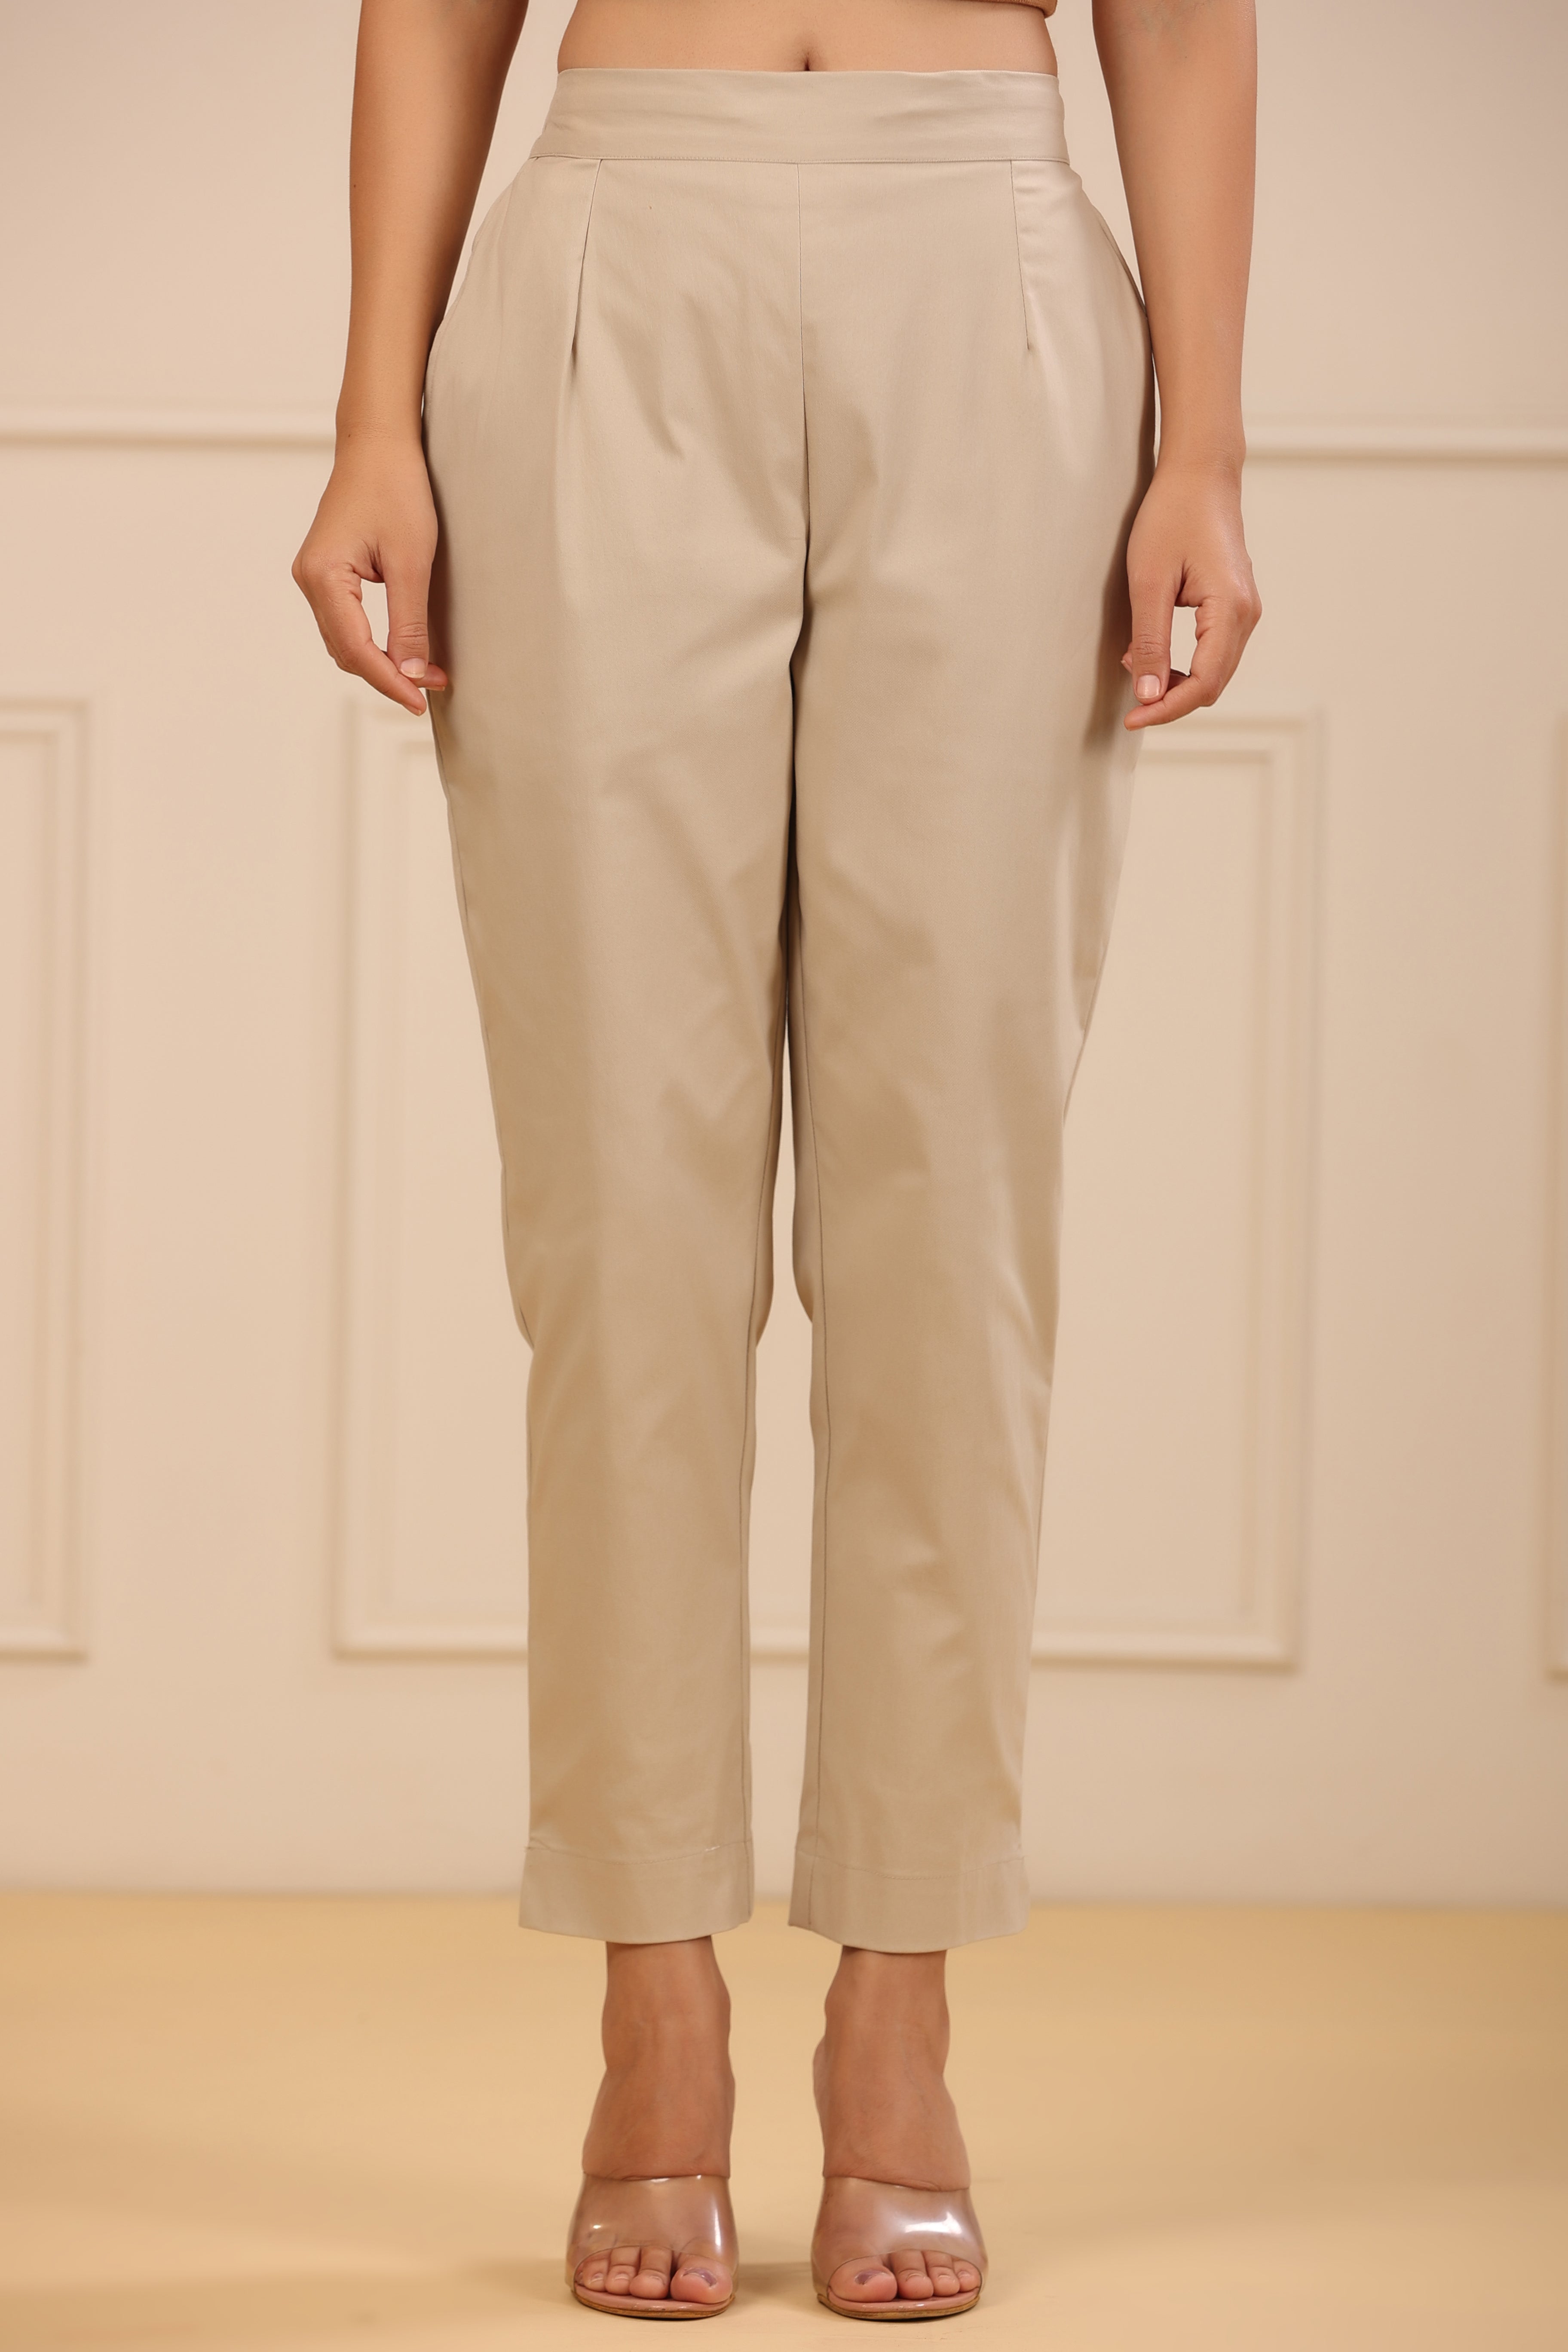 Juniper Women's Beige Cotton Spendex Solid Straight Pant/Slim Pant